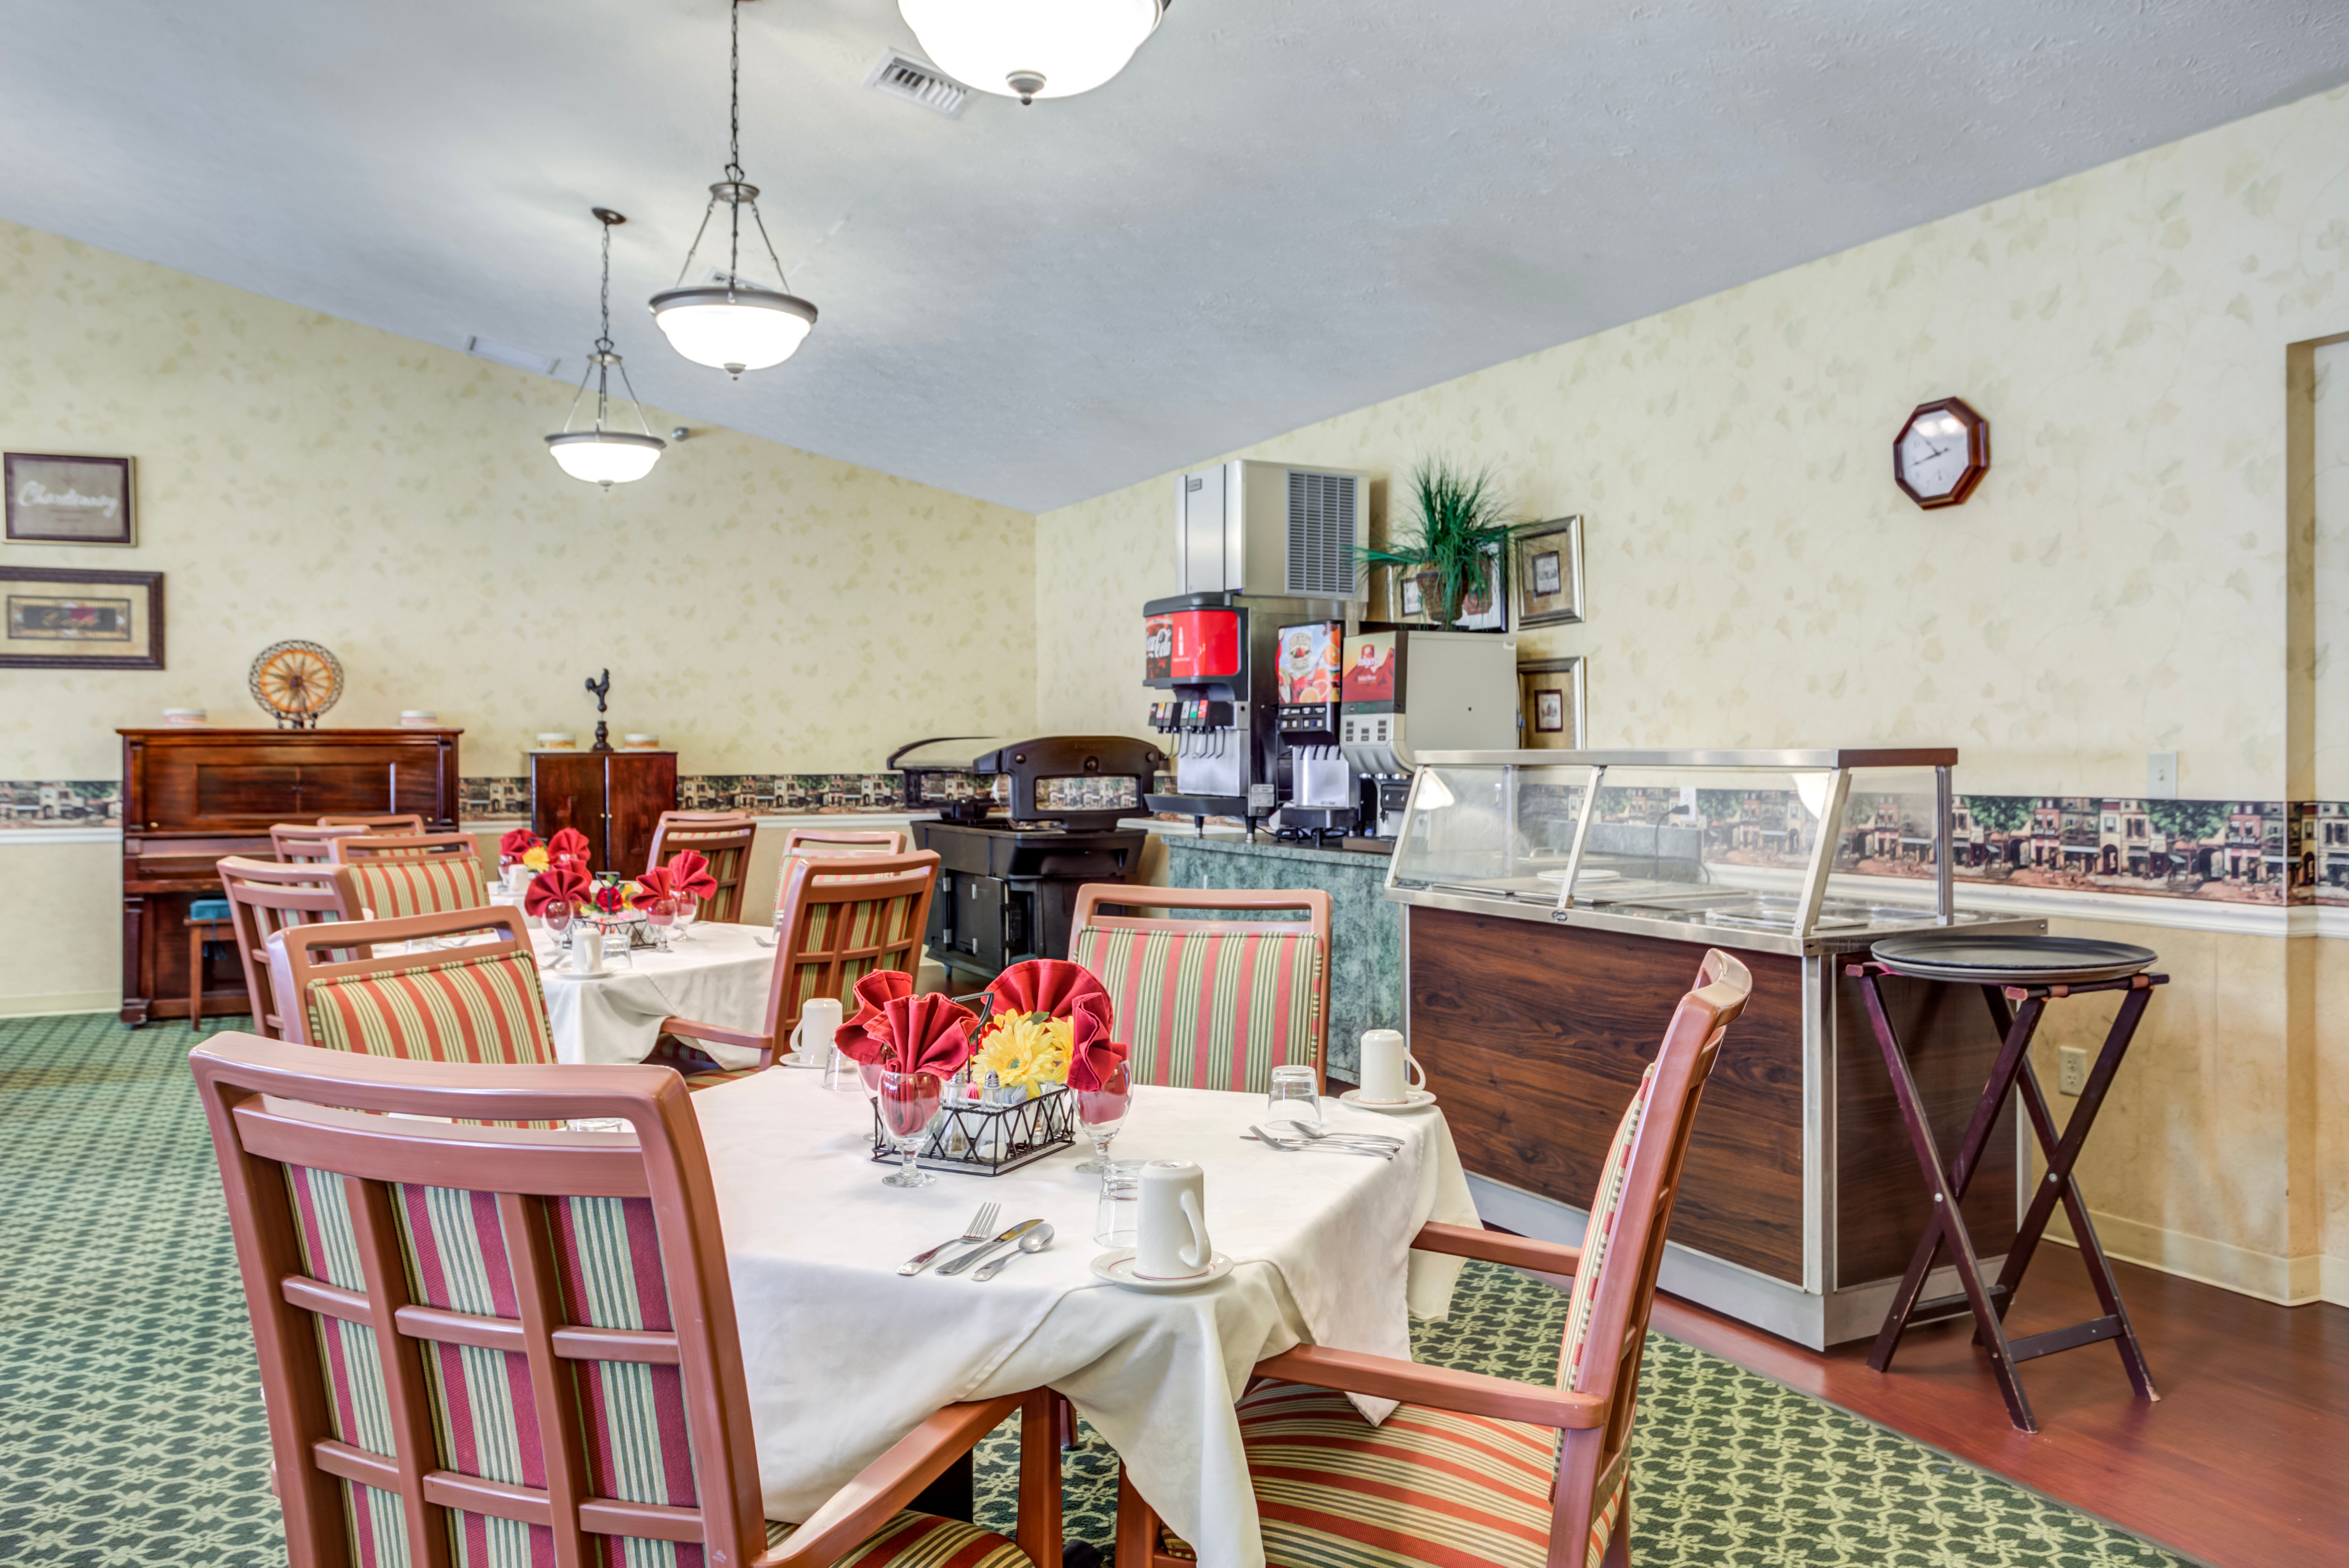 A fine dining room at Glen Ridge Health Campus in Louisville, Kentucky